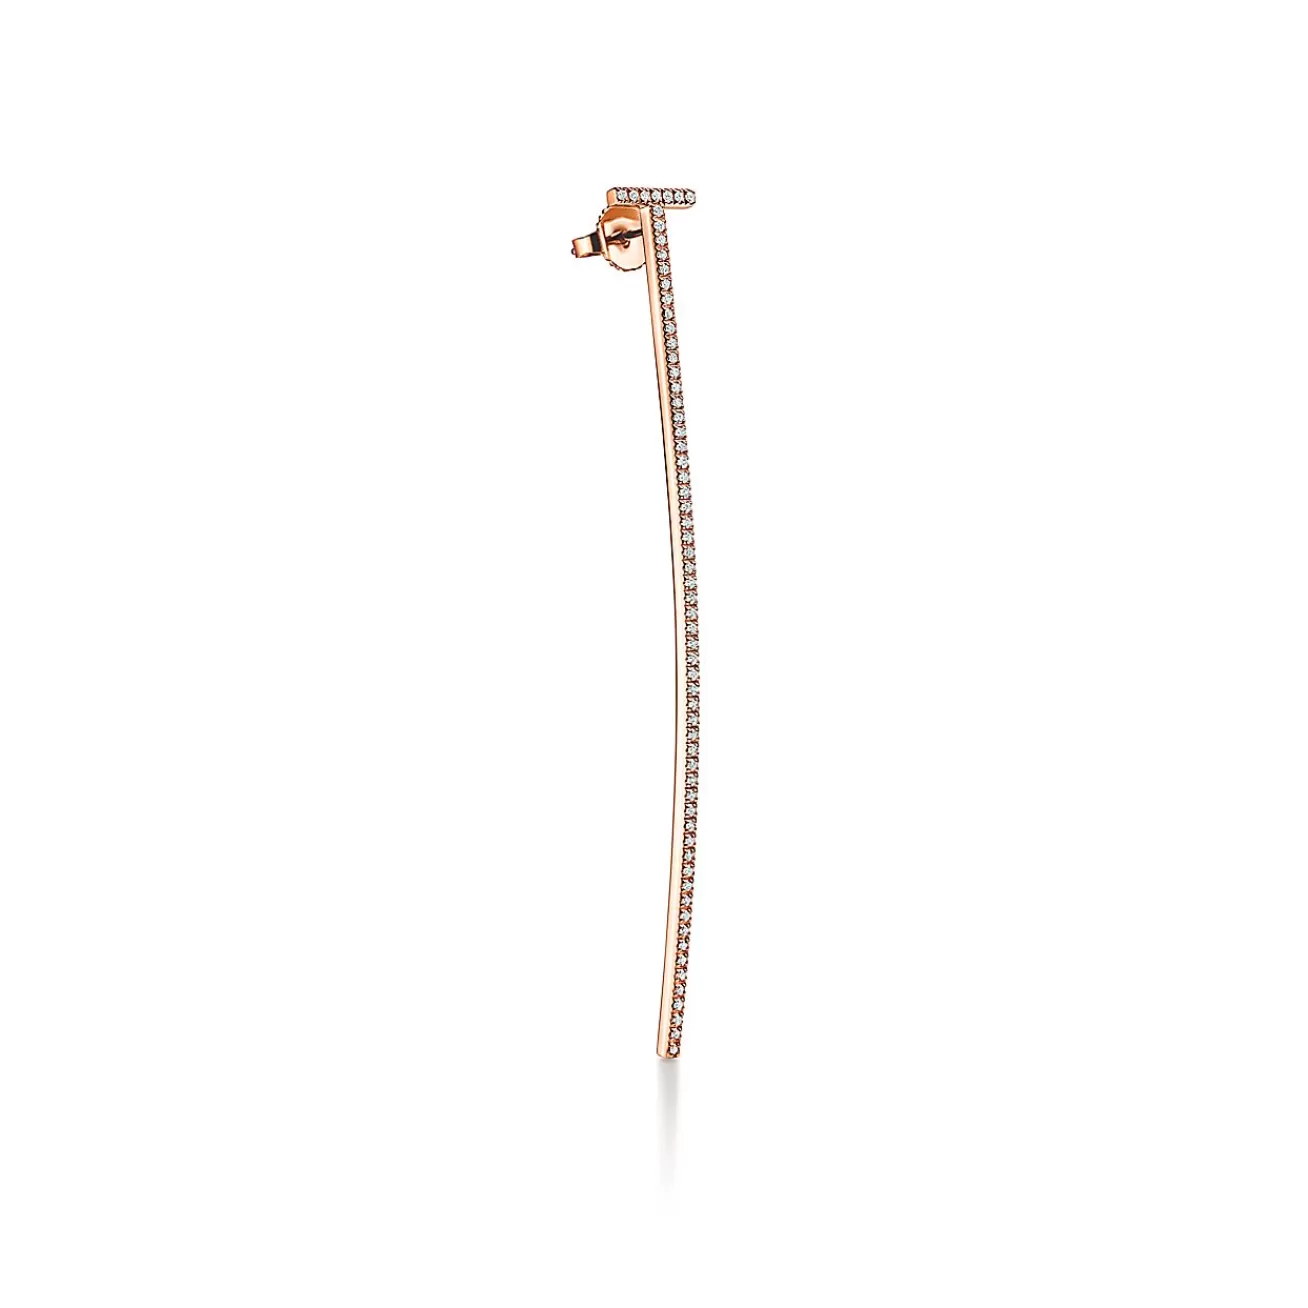 Tiffany & Co. Tiffany T elongated wire bar earrings in 18k rose gold with diamonds. | ^ Earrings | Rose Gold Jewelry